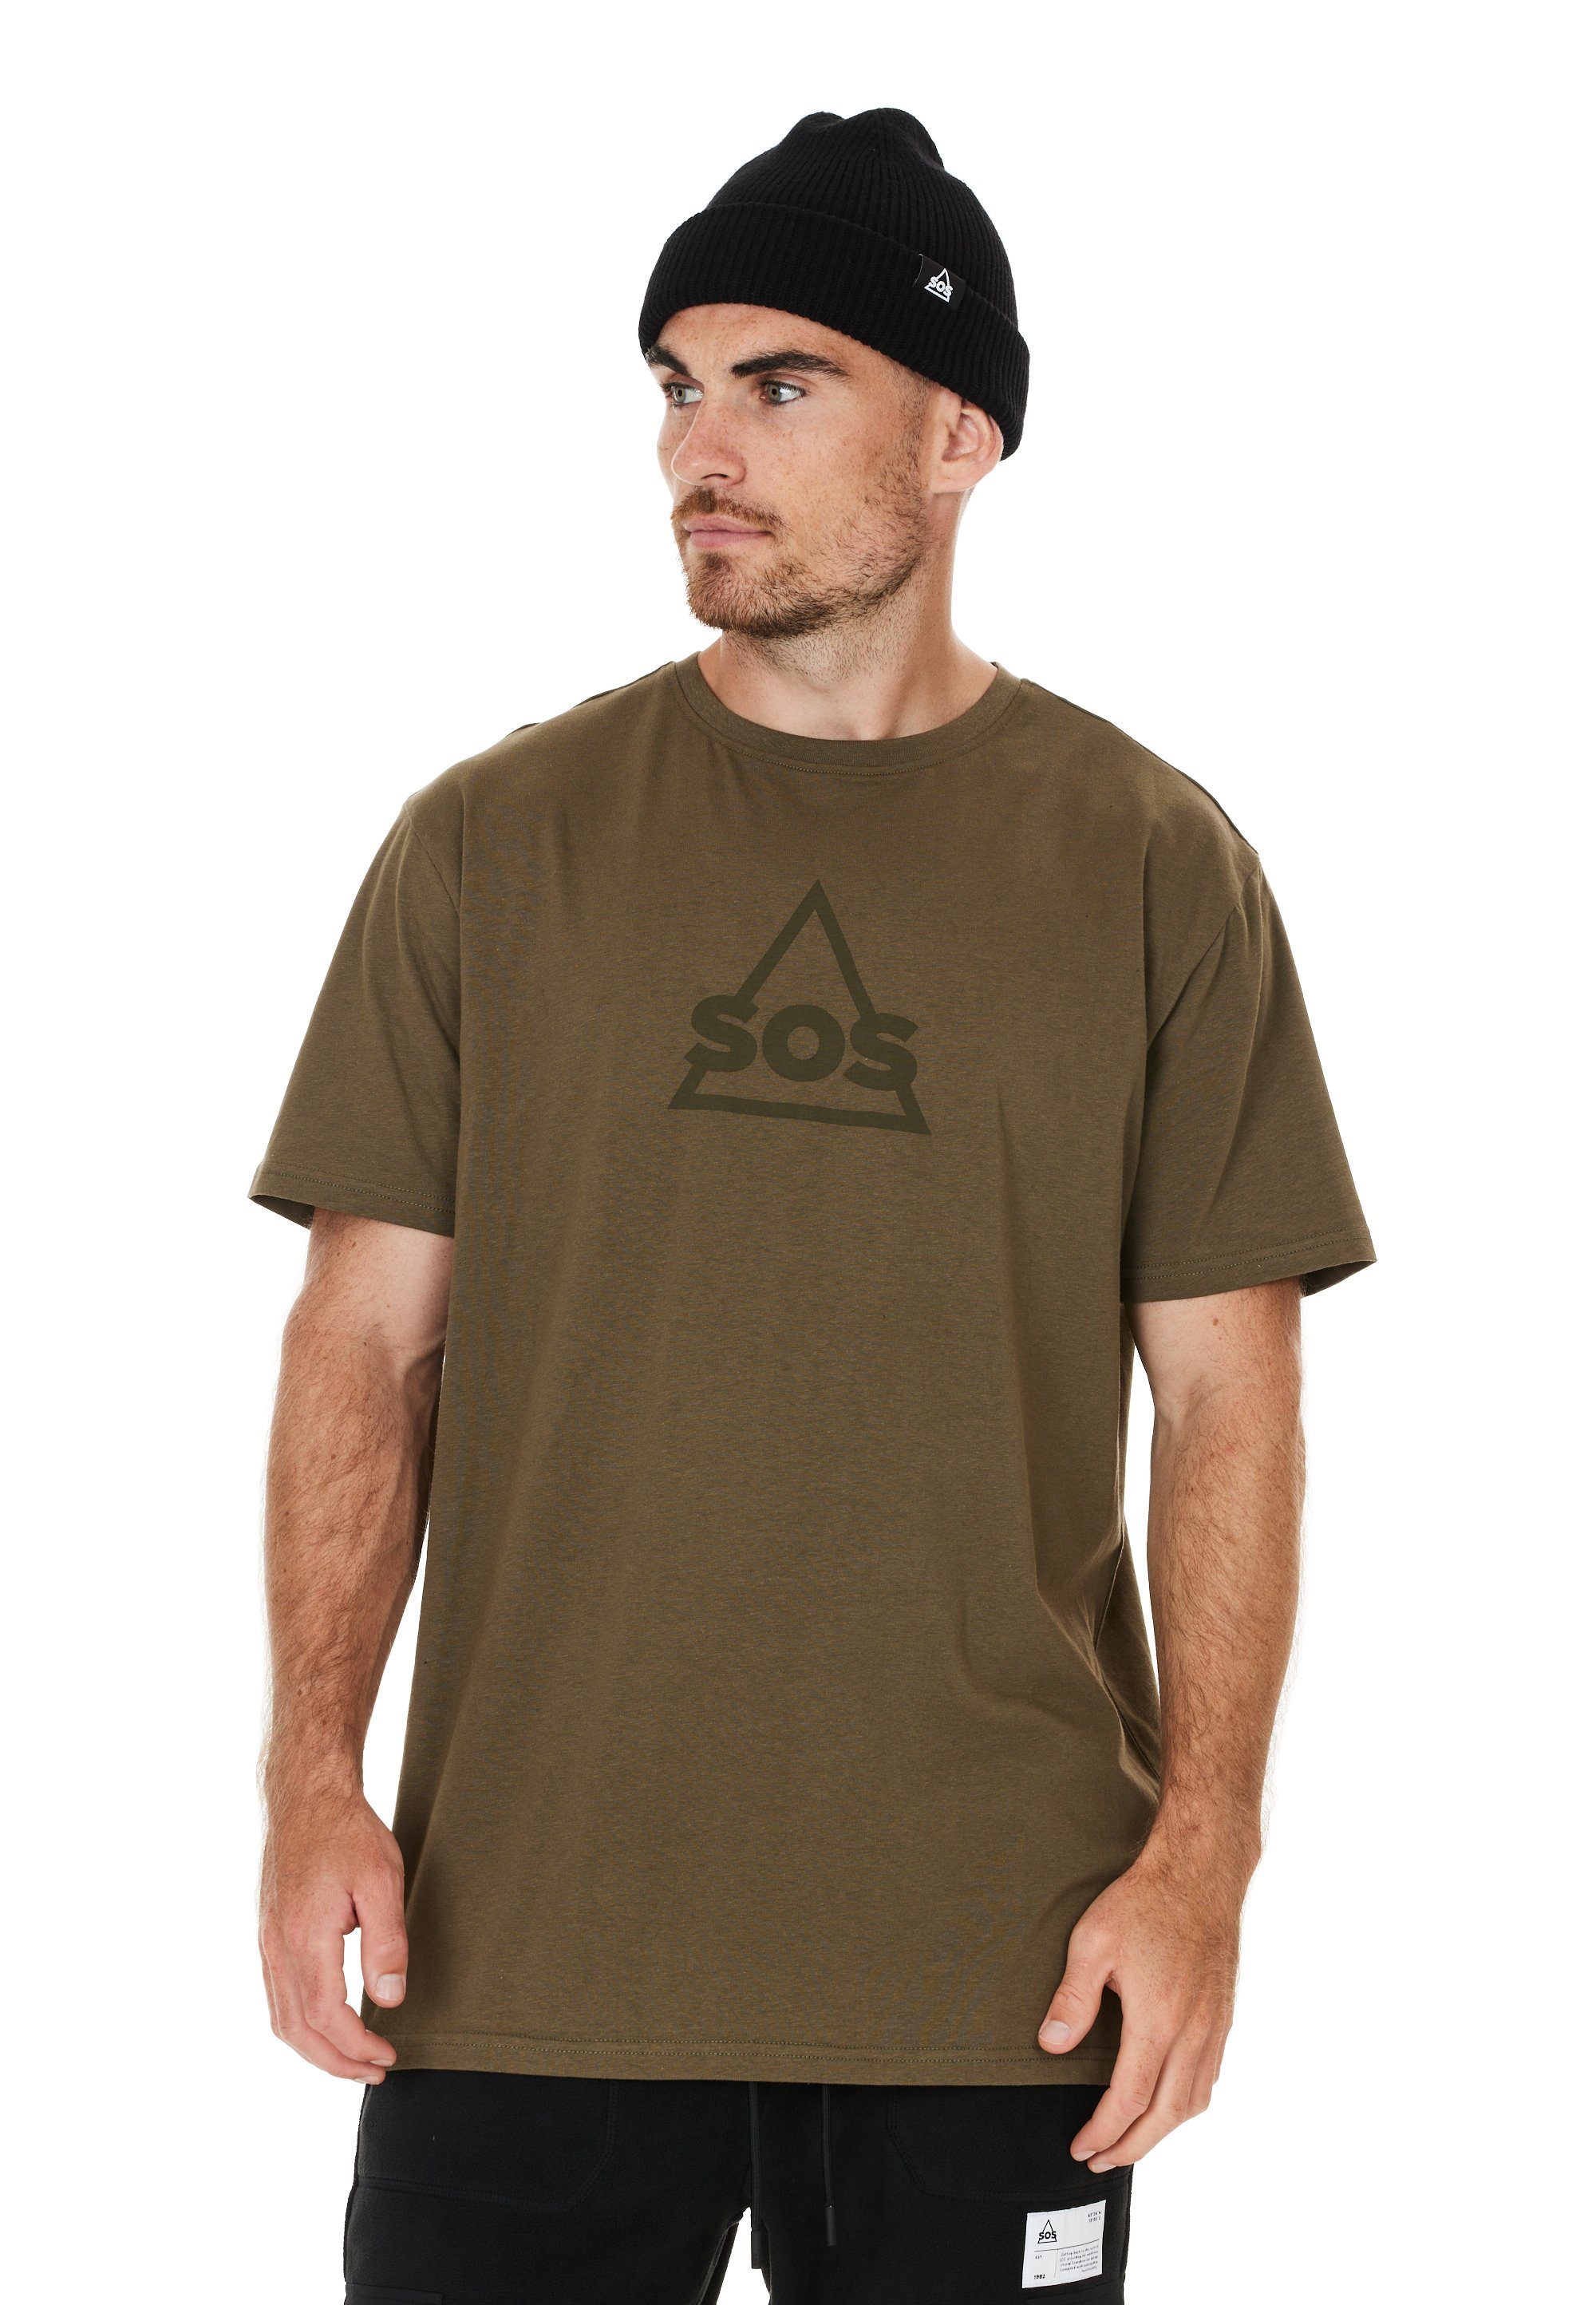 SOS T-Shirt Kvitfjell mit großem Markenlogo auf der Brust khaki